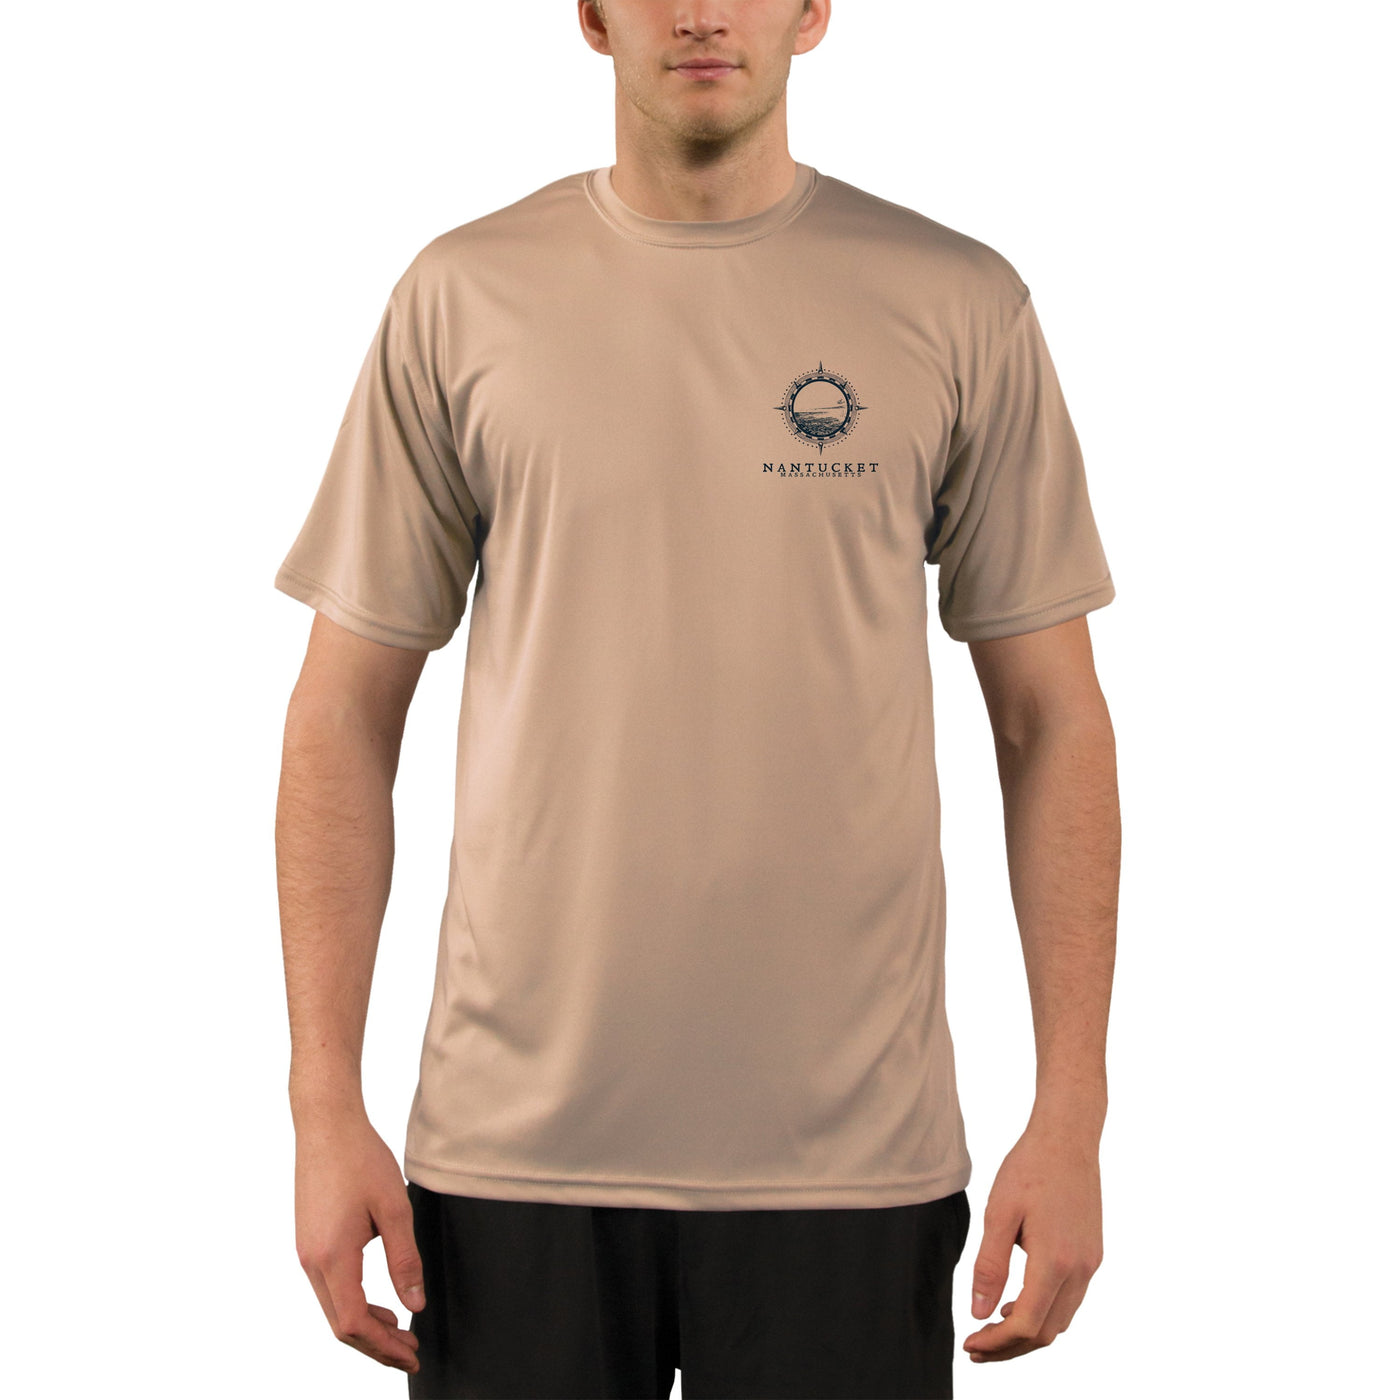 Compass Vintage Nantucket Men's UPF 50+ Short Sleeve T-shirt